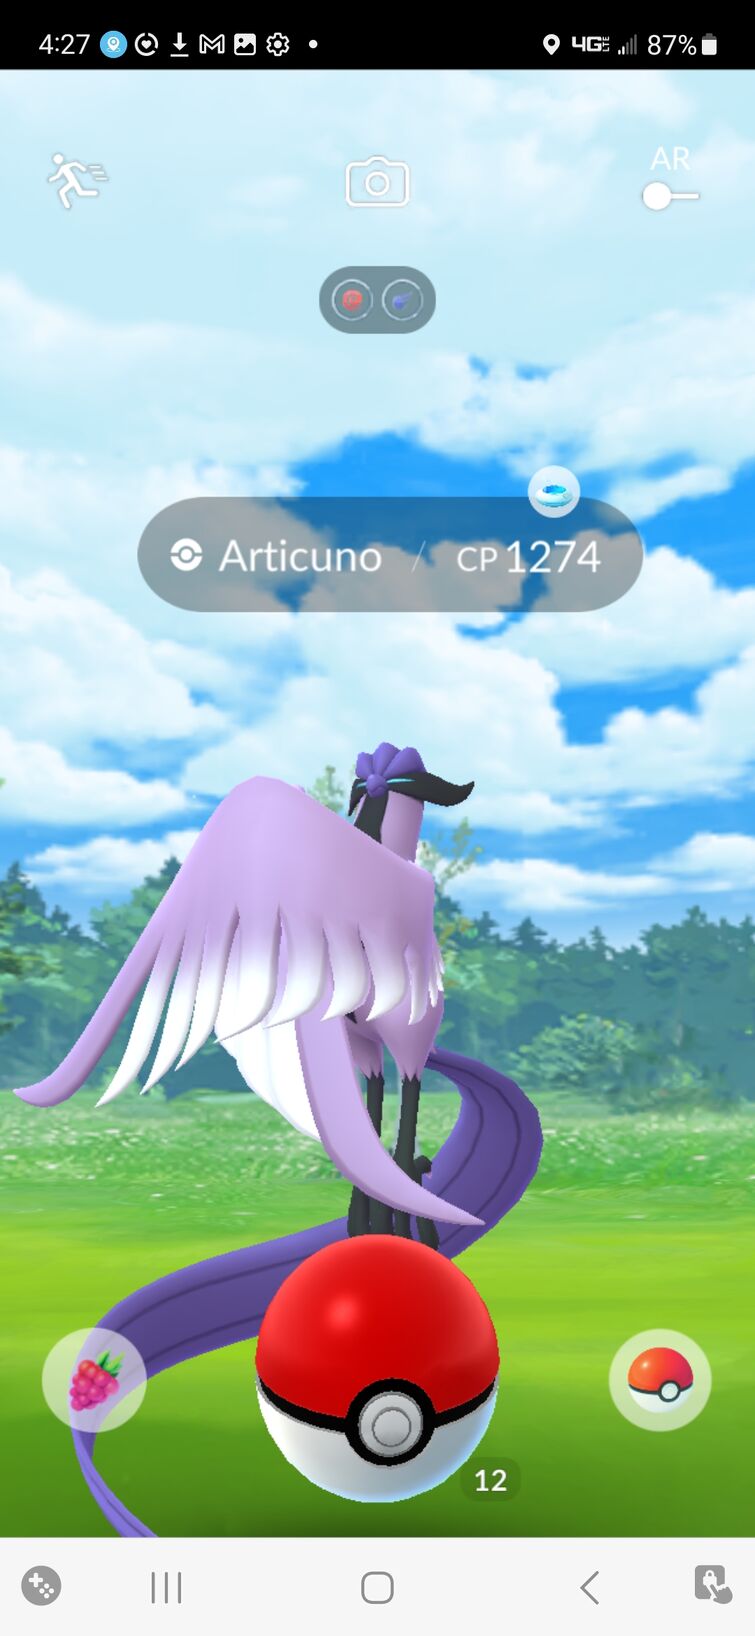 Articuno (Pokémon) - Pokémon Go